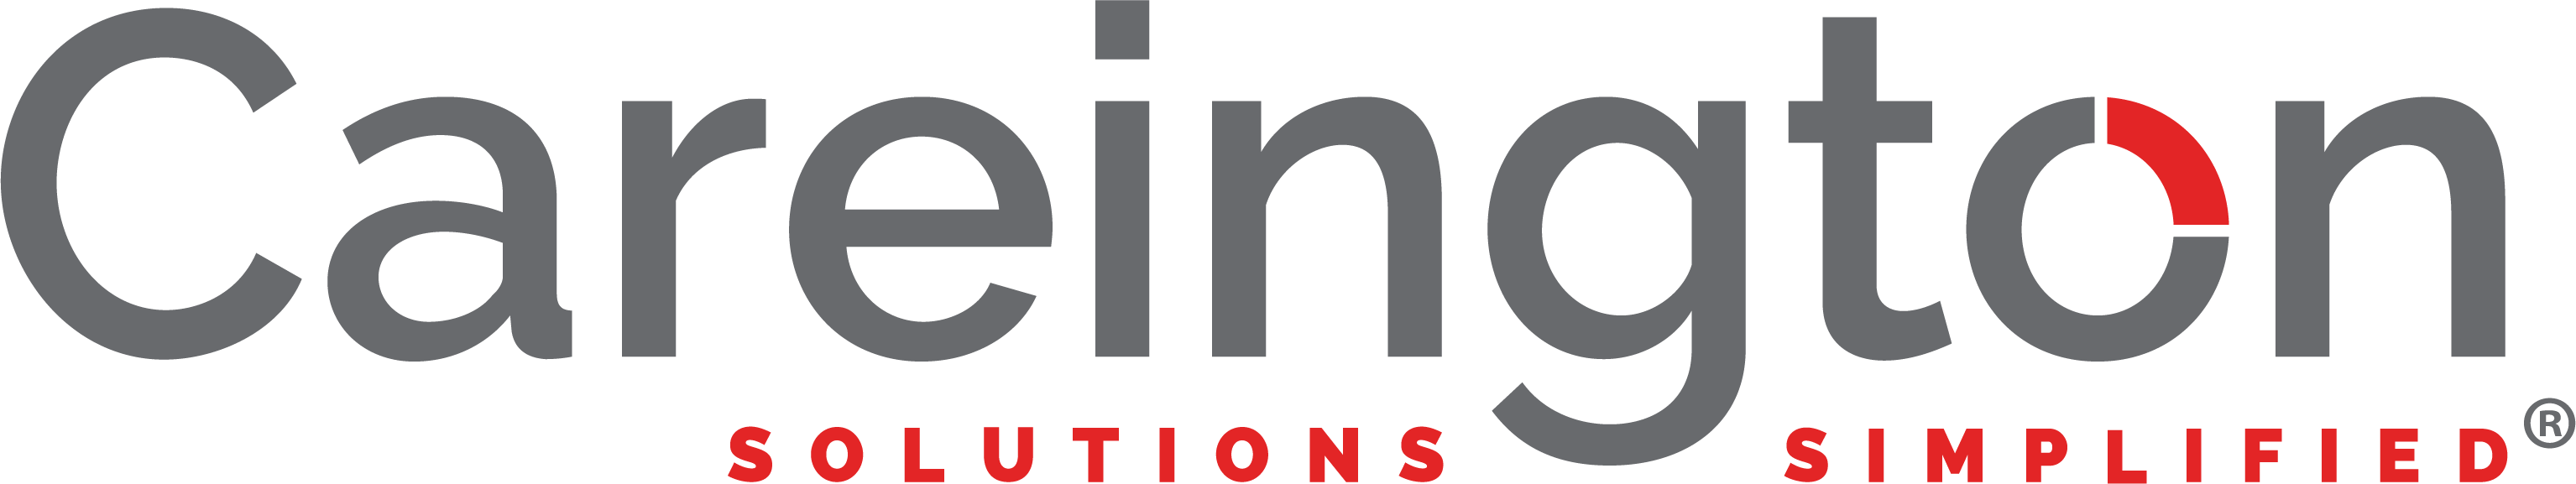 Careington Solution Simplified Logo_Reg